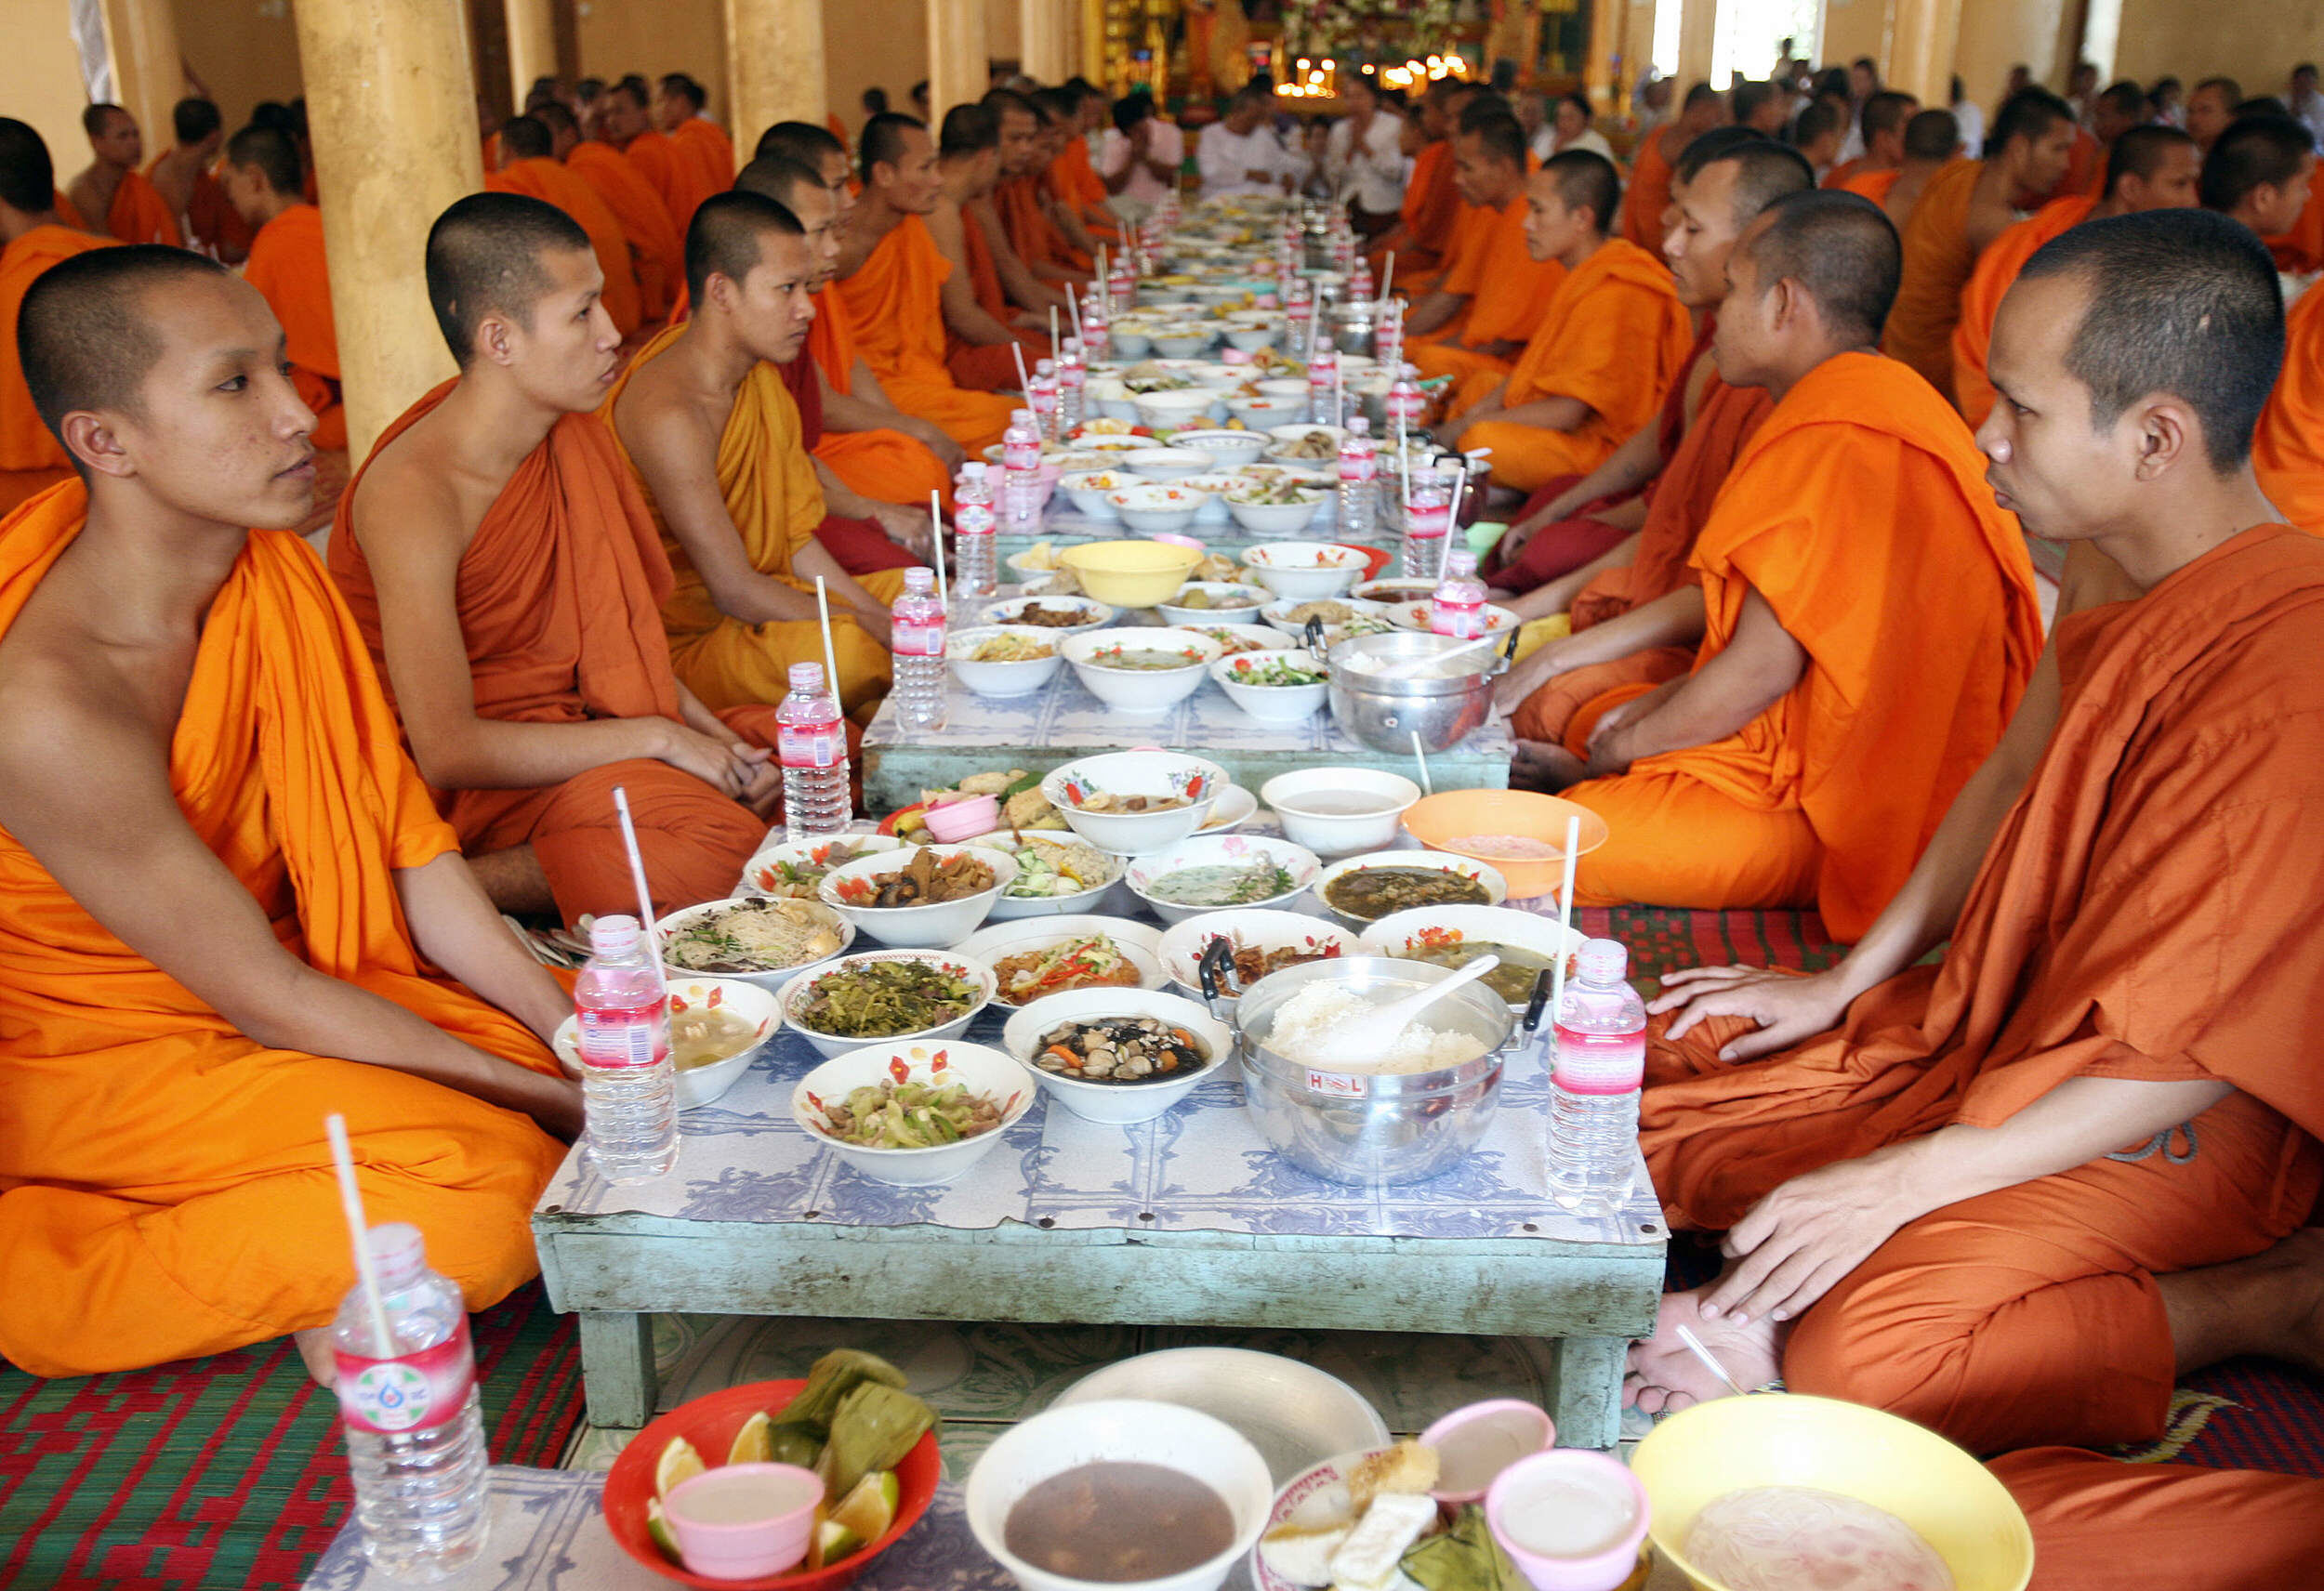 Монахи едят мясо. Буддийский монах Тхеравада. Сангха буддизм. Рацион монахов Шаолинь. Еда монахов монастыря Шаолинь.